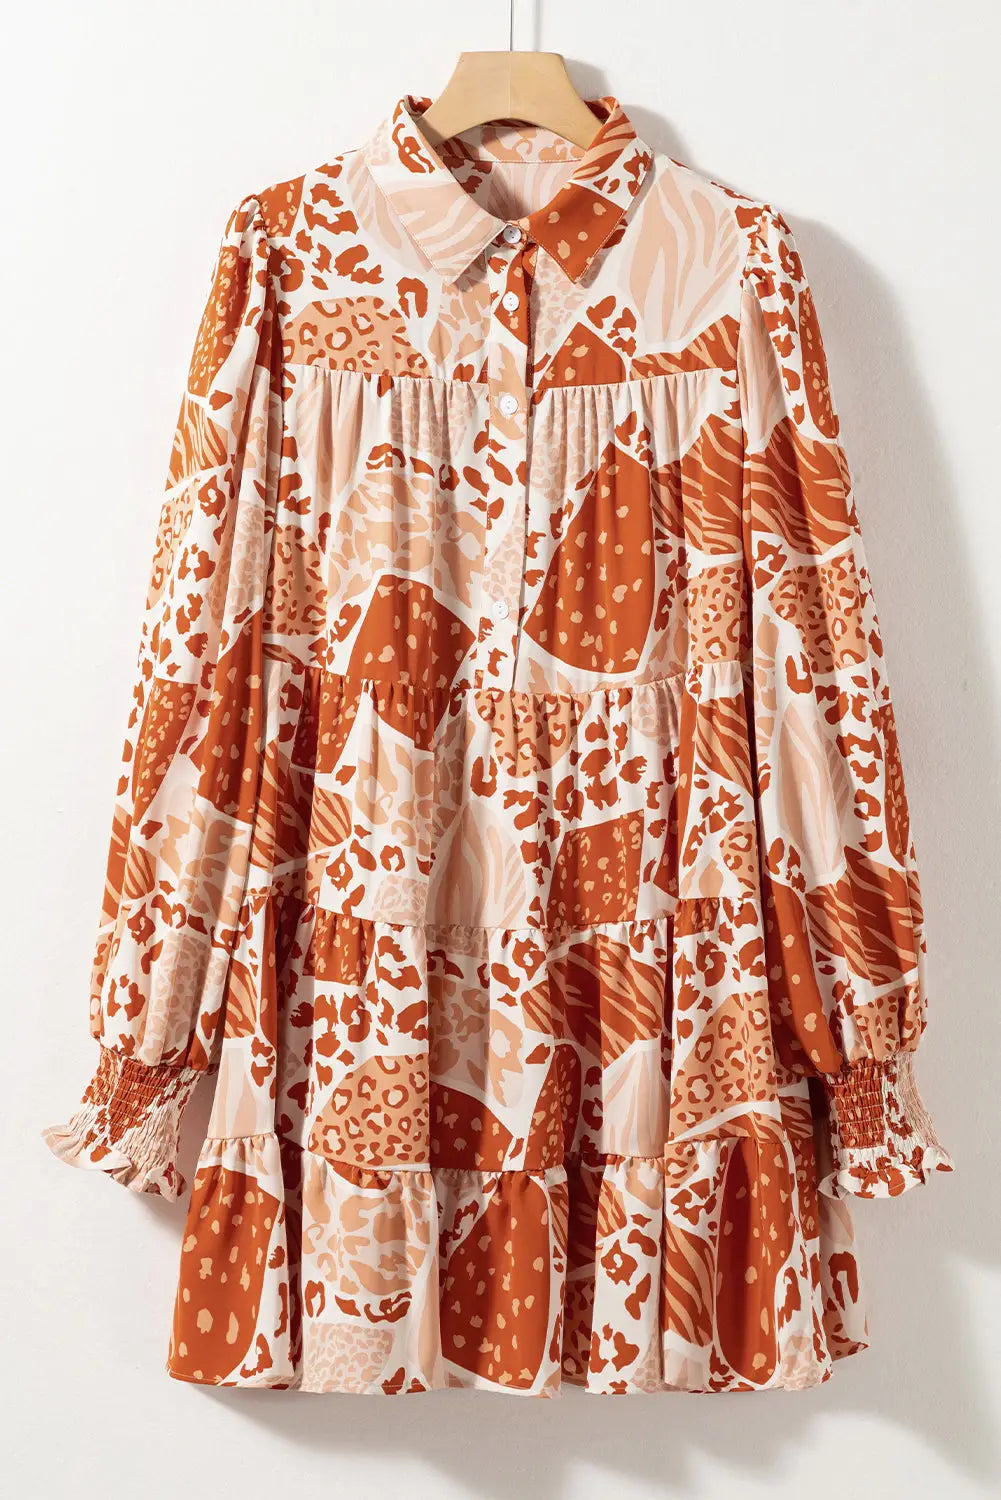 Brown multi pattern swing dress - dresses